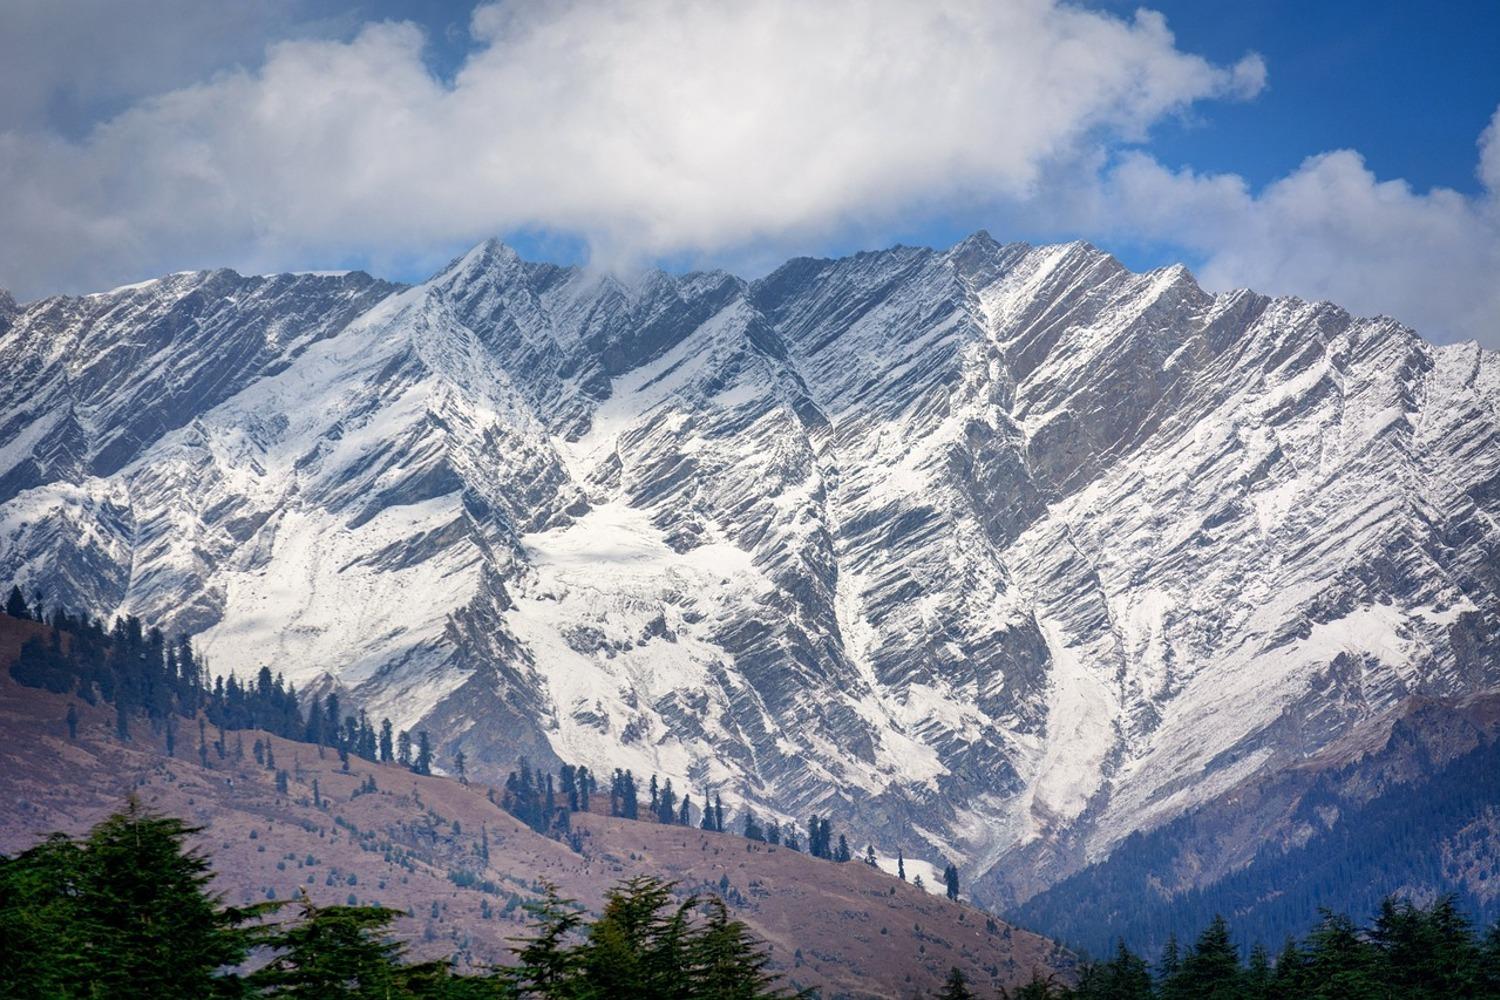 Manali, Himachal Pradesh, HD Wallpaper & background